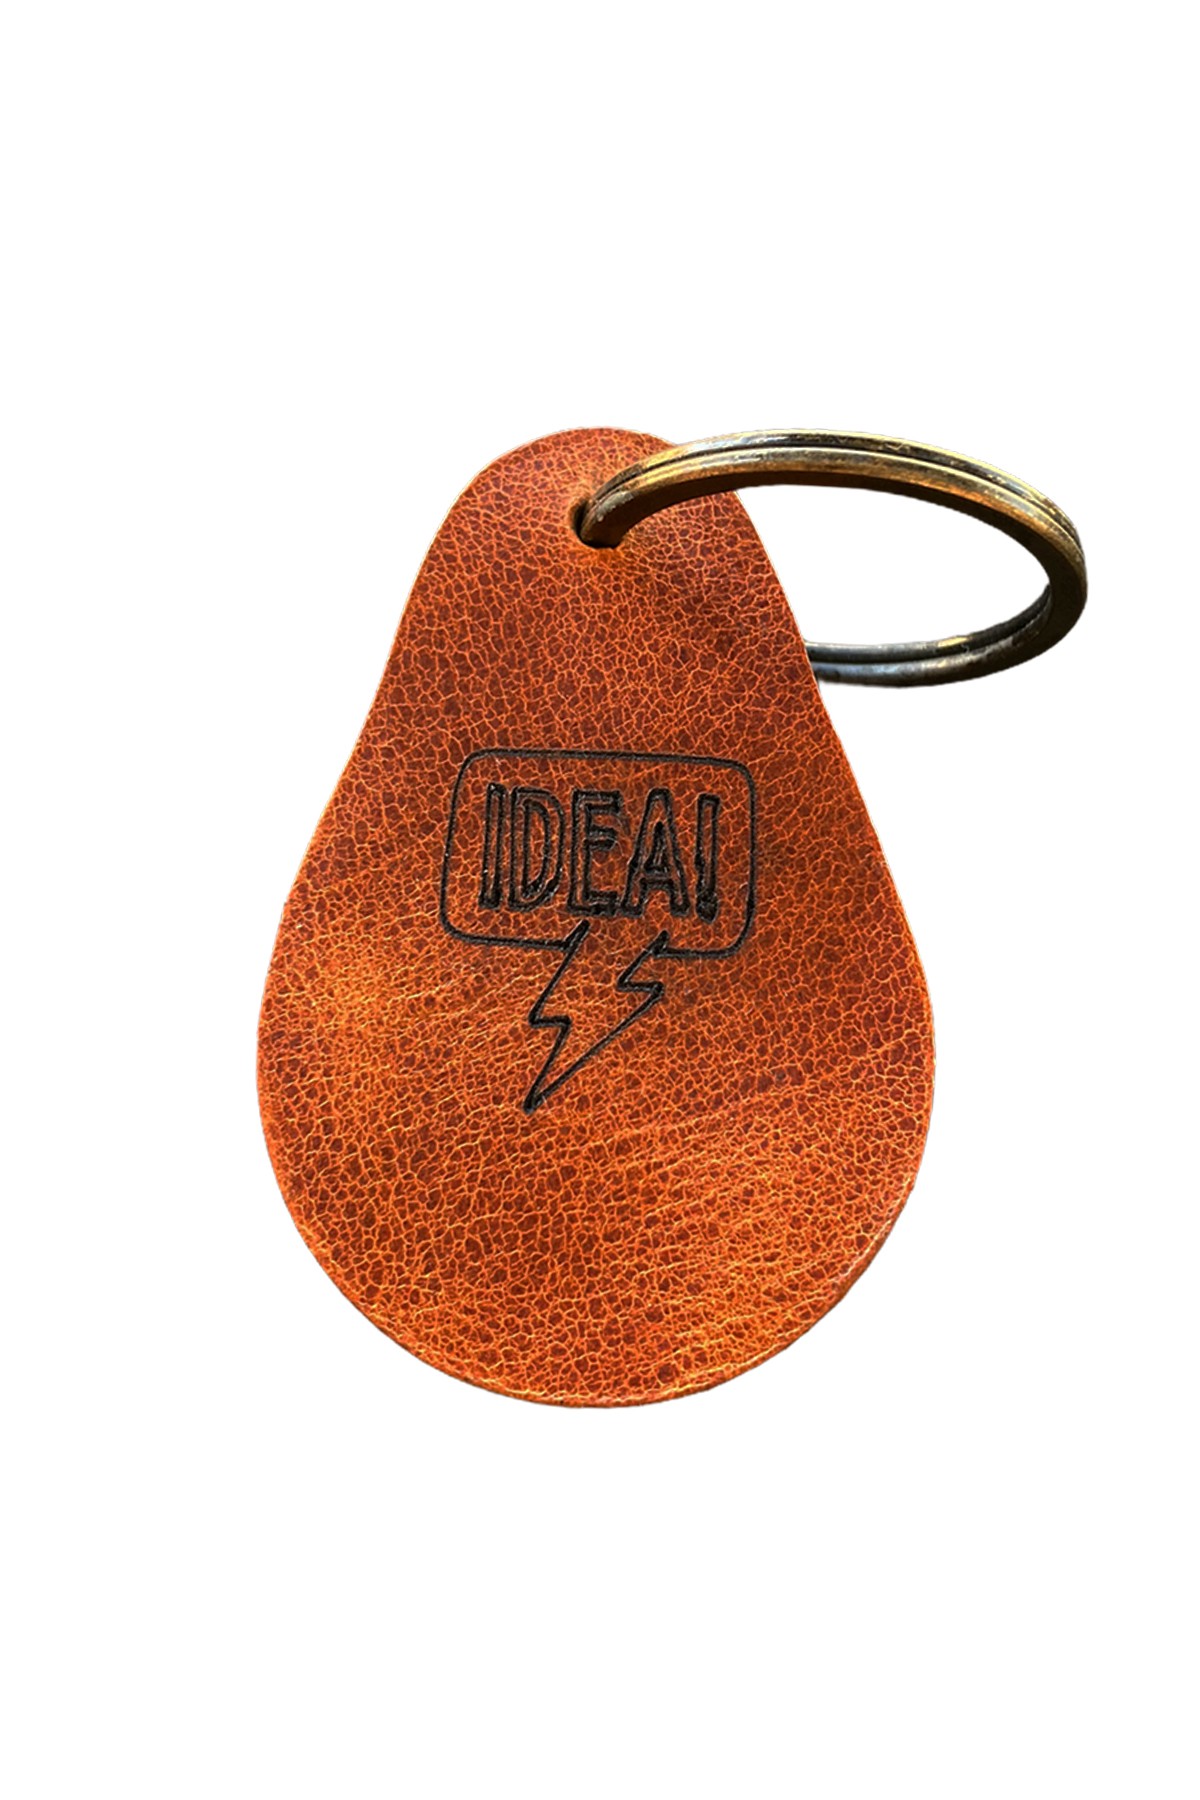 Genuine Leather Keychain - Idea Logo | Bretya Leather